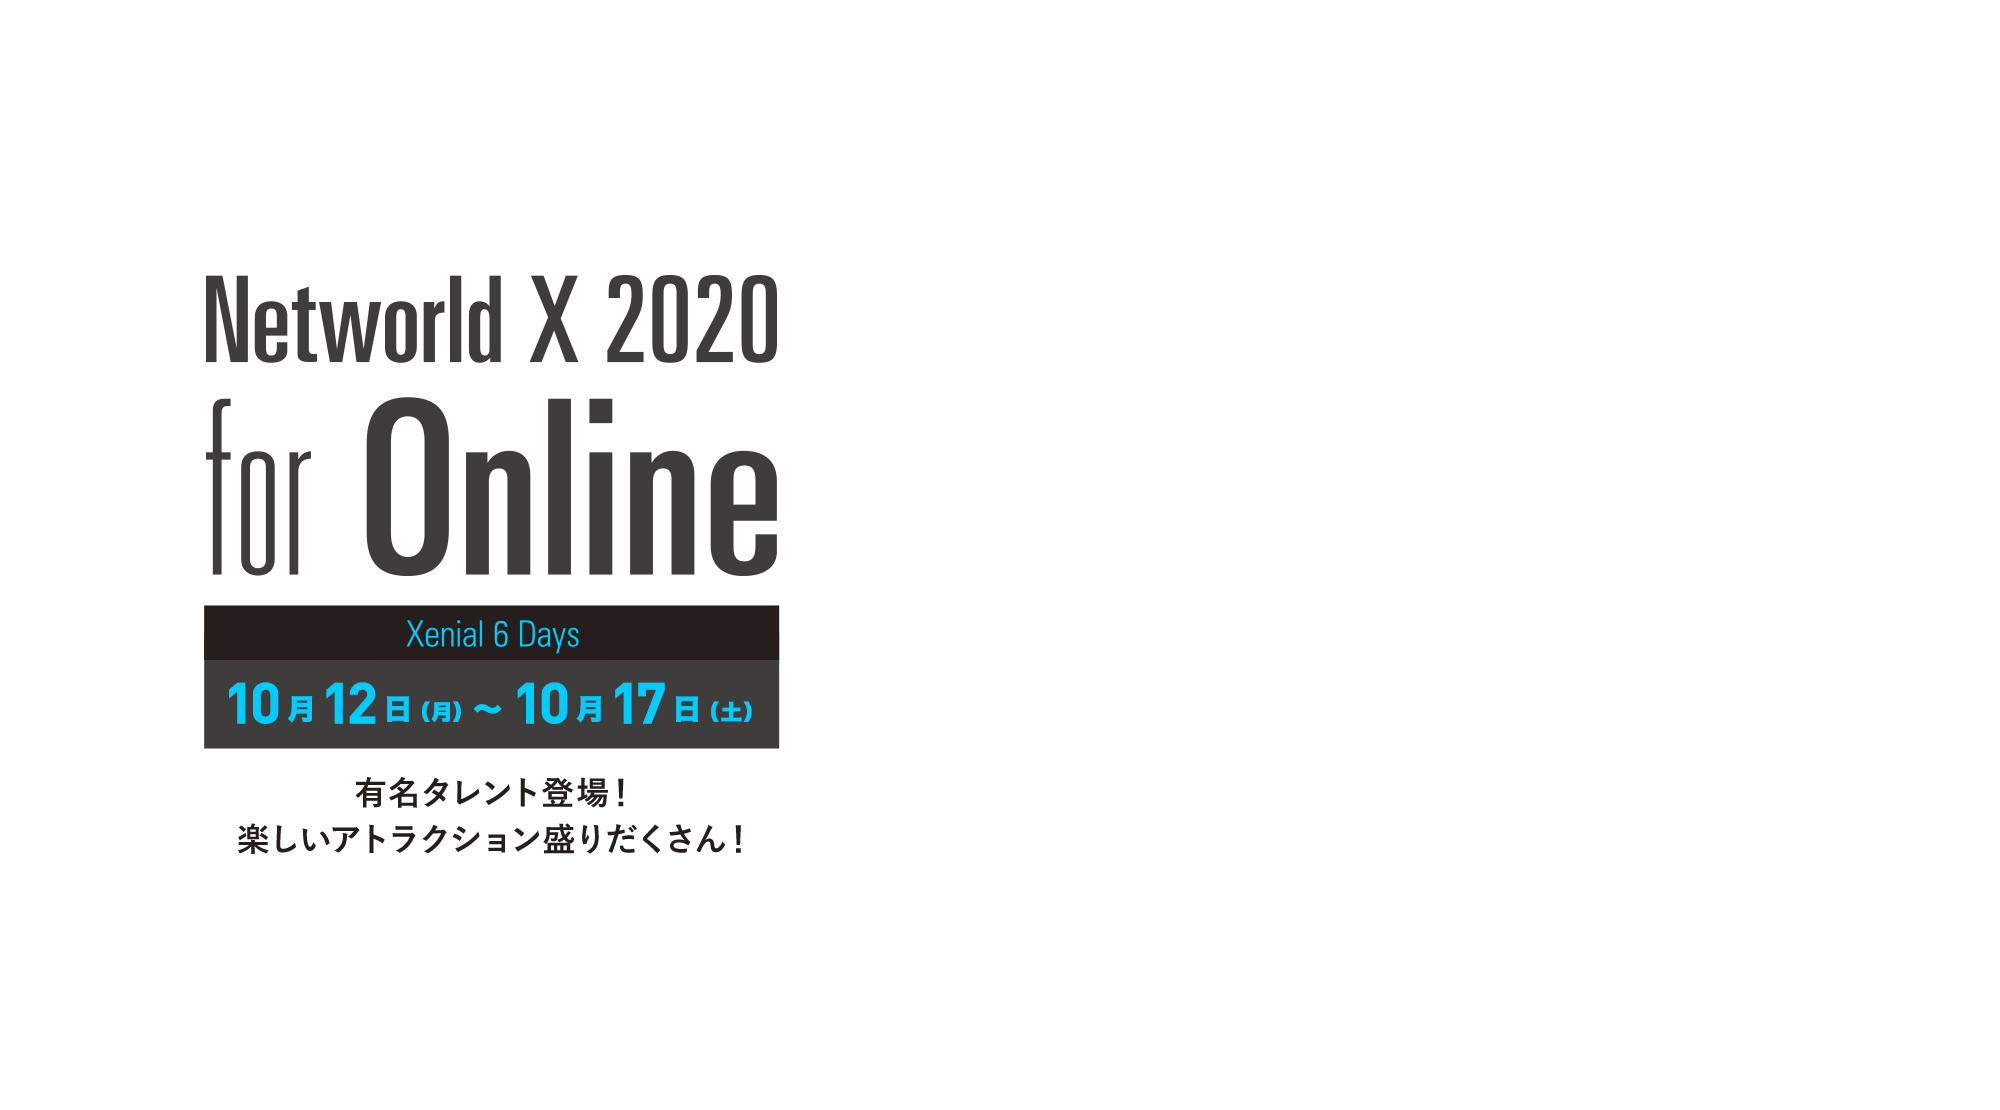 Networld X 2020